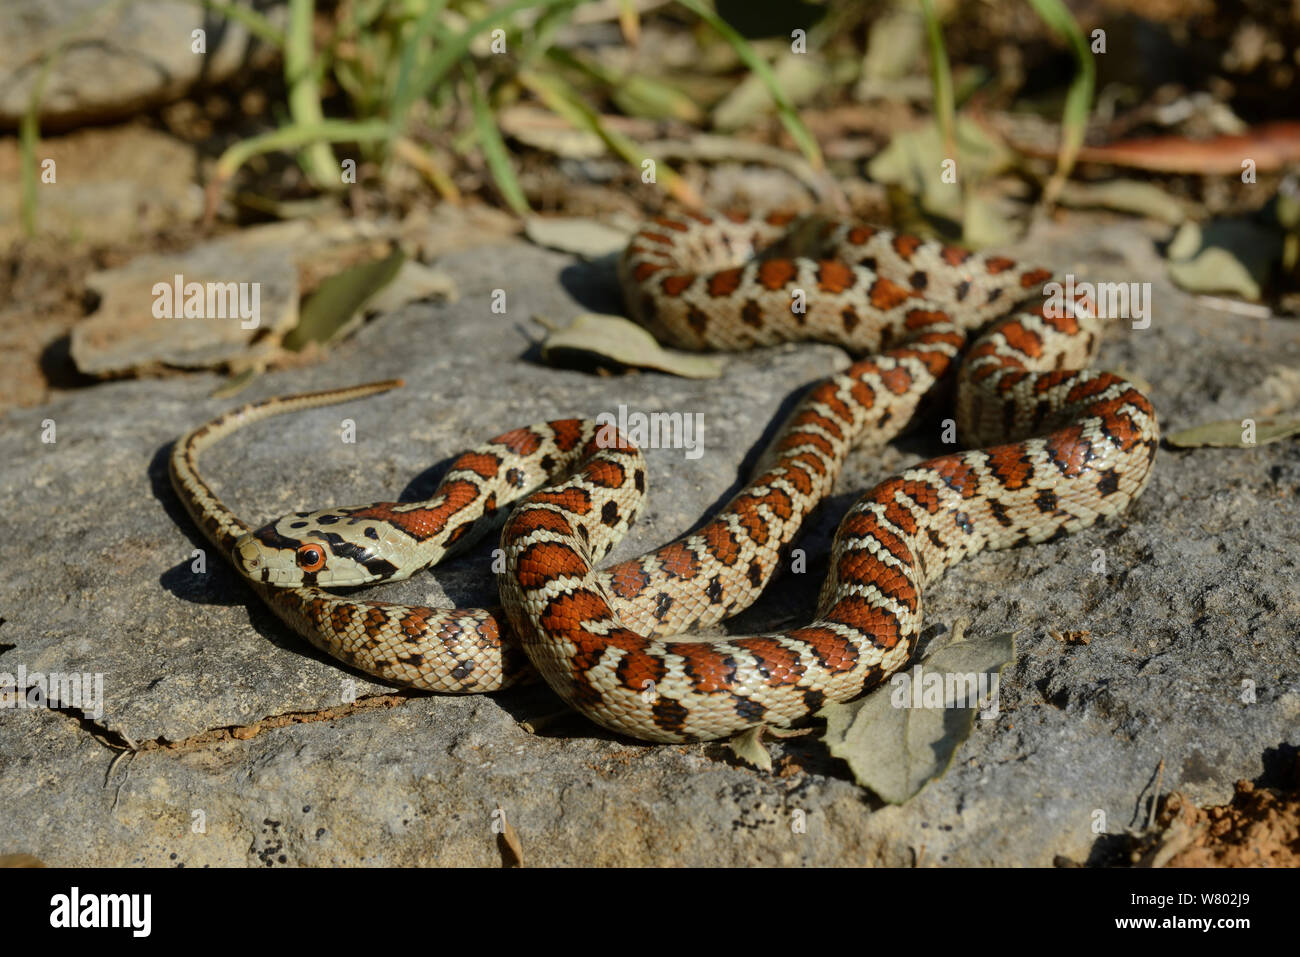 Leopard snake (Zamenis situla) captive, occurs in Eurasia. Stock Photo